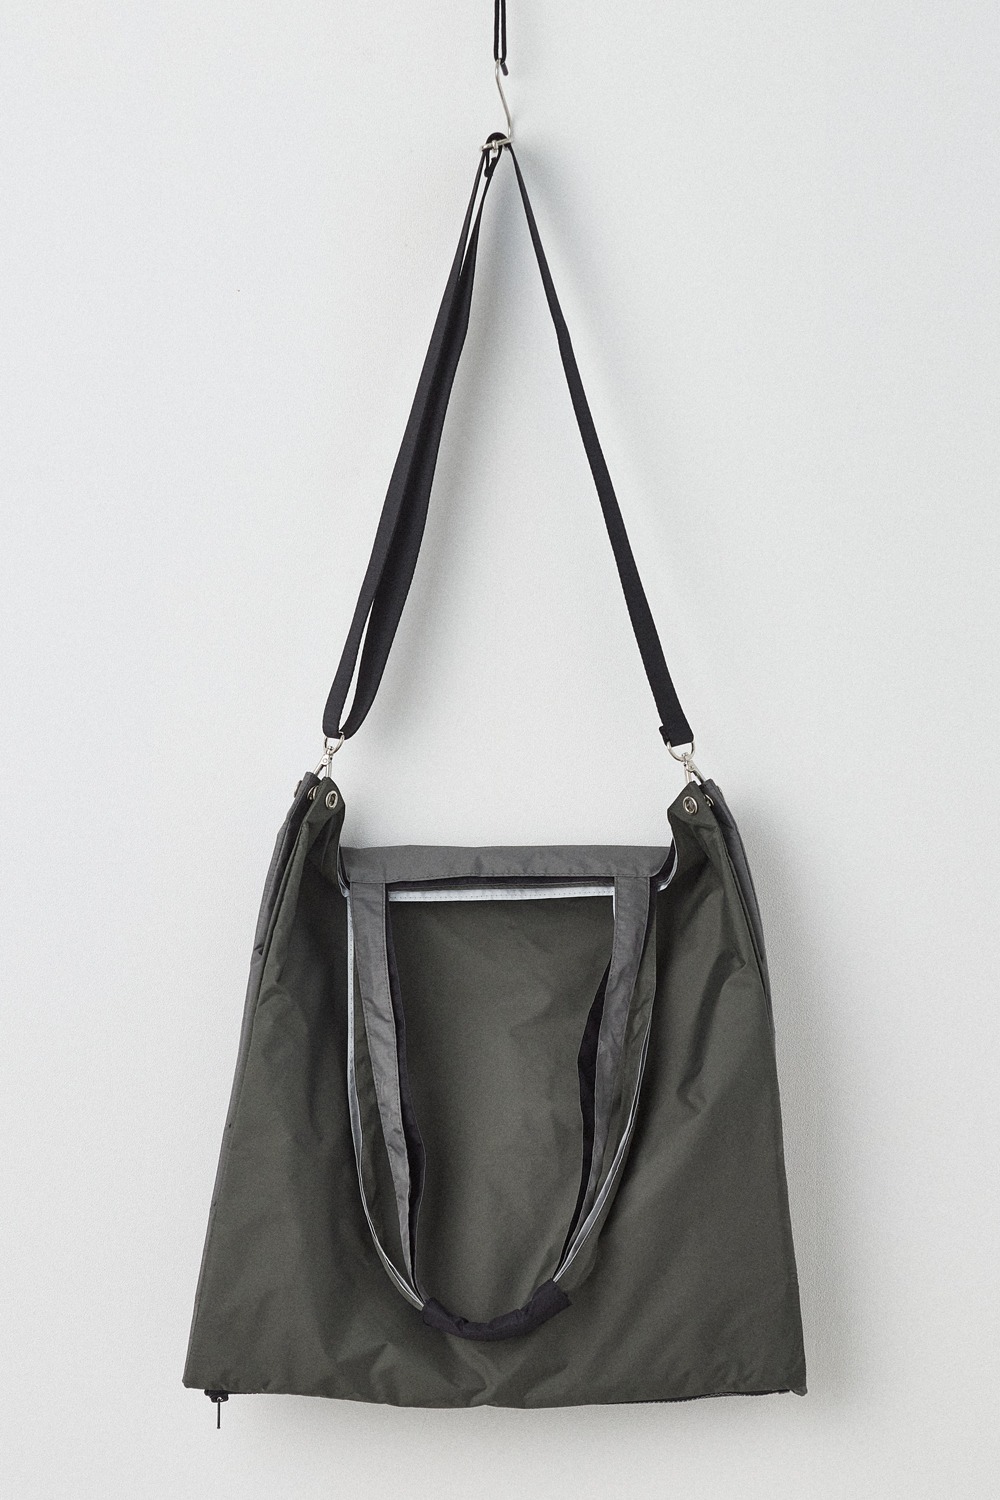 Modular Bag Khaki/Olive Grey